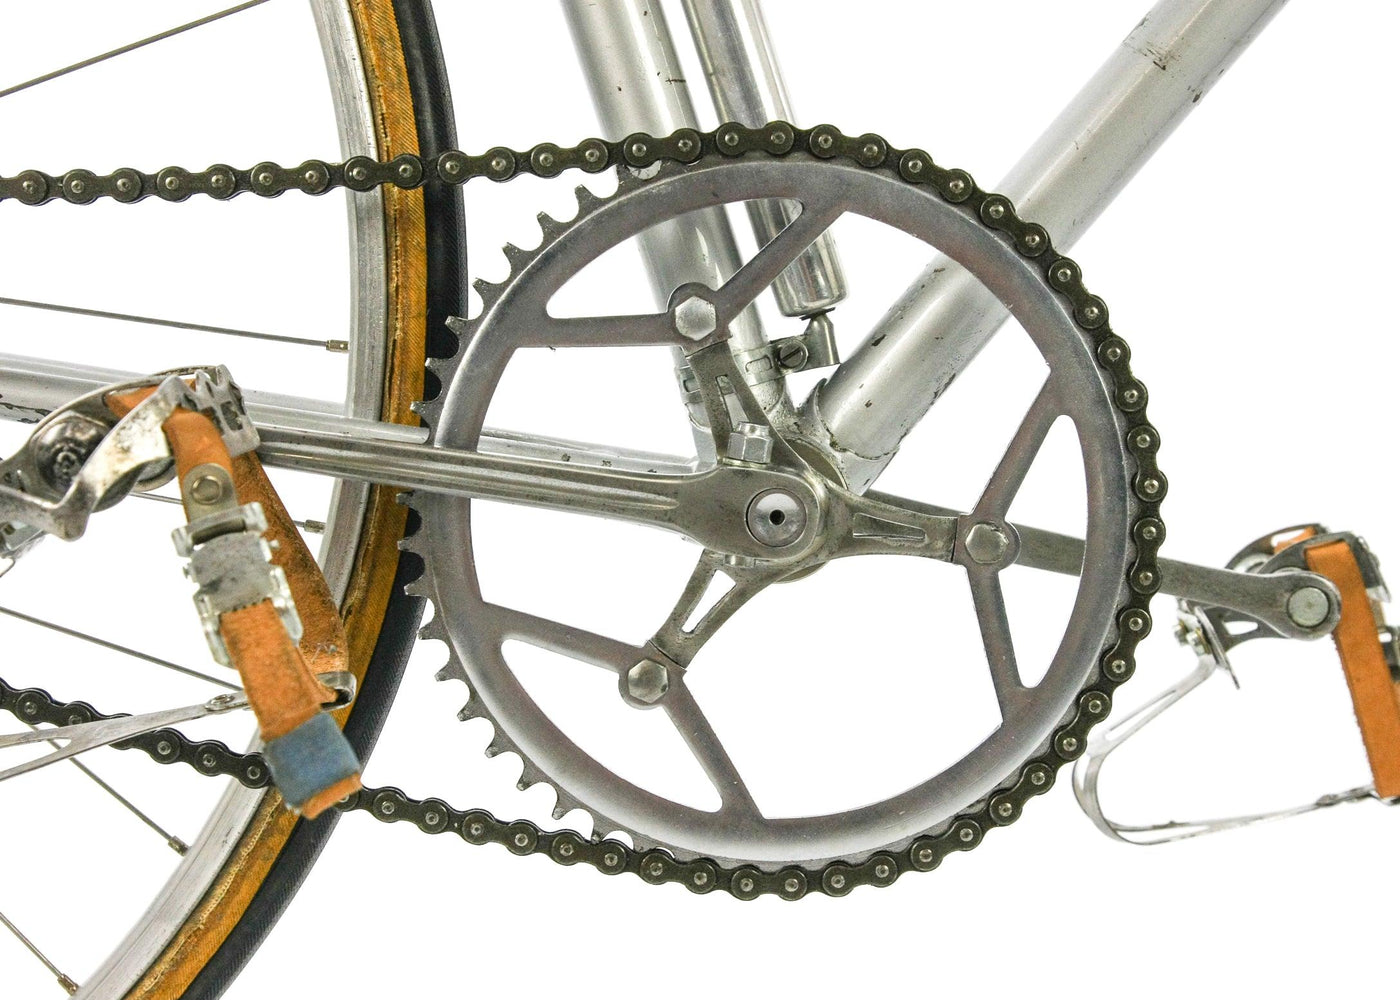 Atala Cambio Corsa 1940s - Steel Vintage Bikes